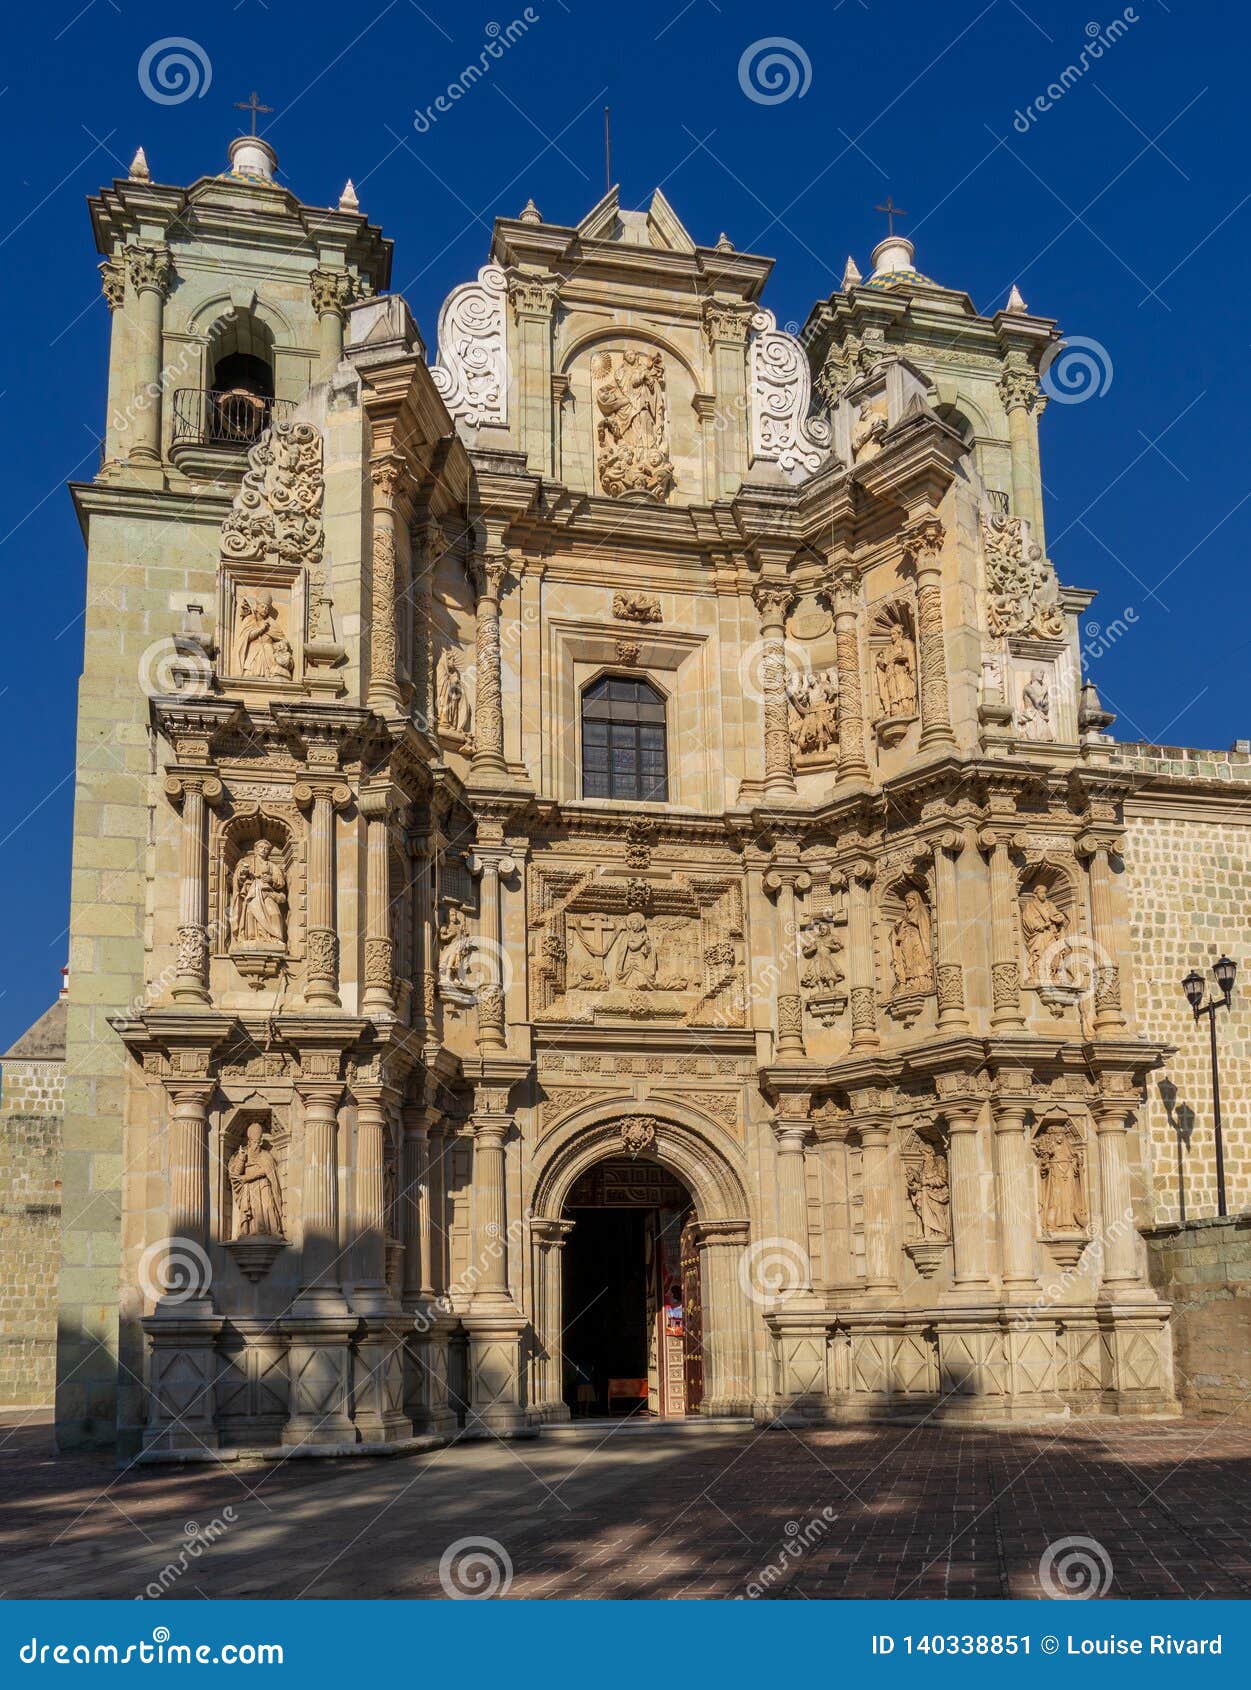 soledad basilica architecture, oaxaca, mexico.